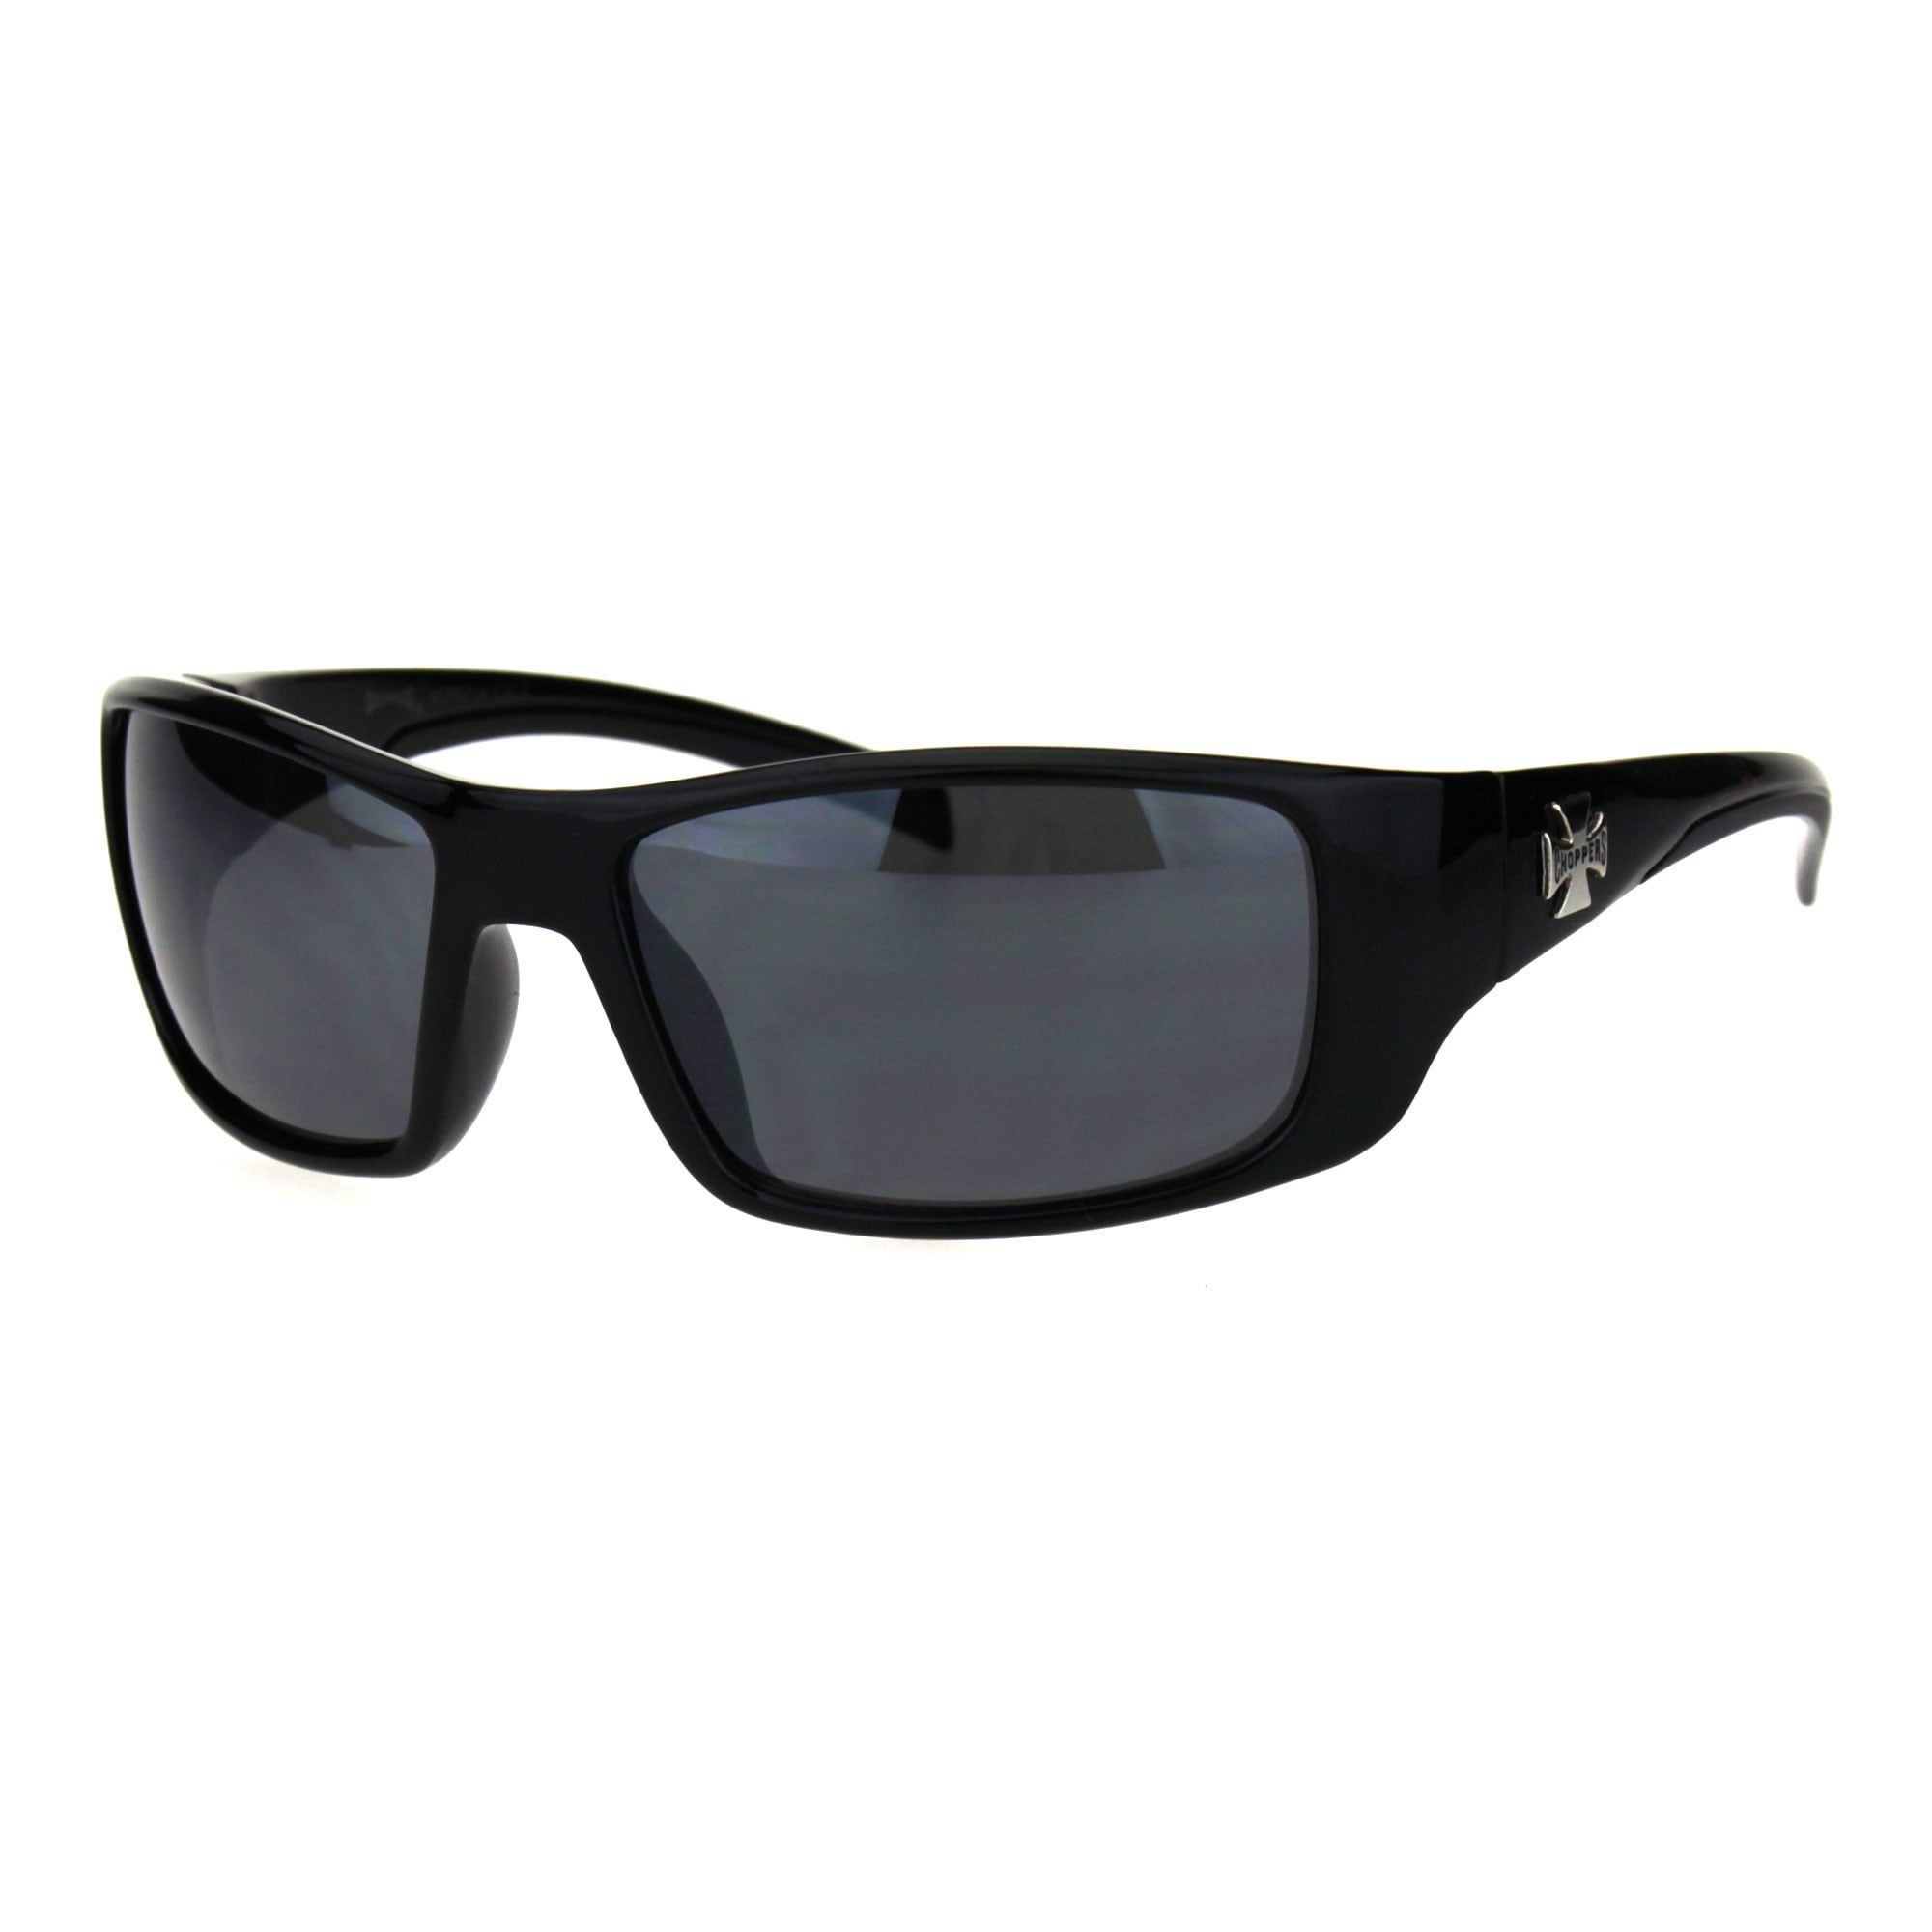 1 Pair Biker Wrap Around Chopper Sunglasses DARK lens gangster black or white 